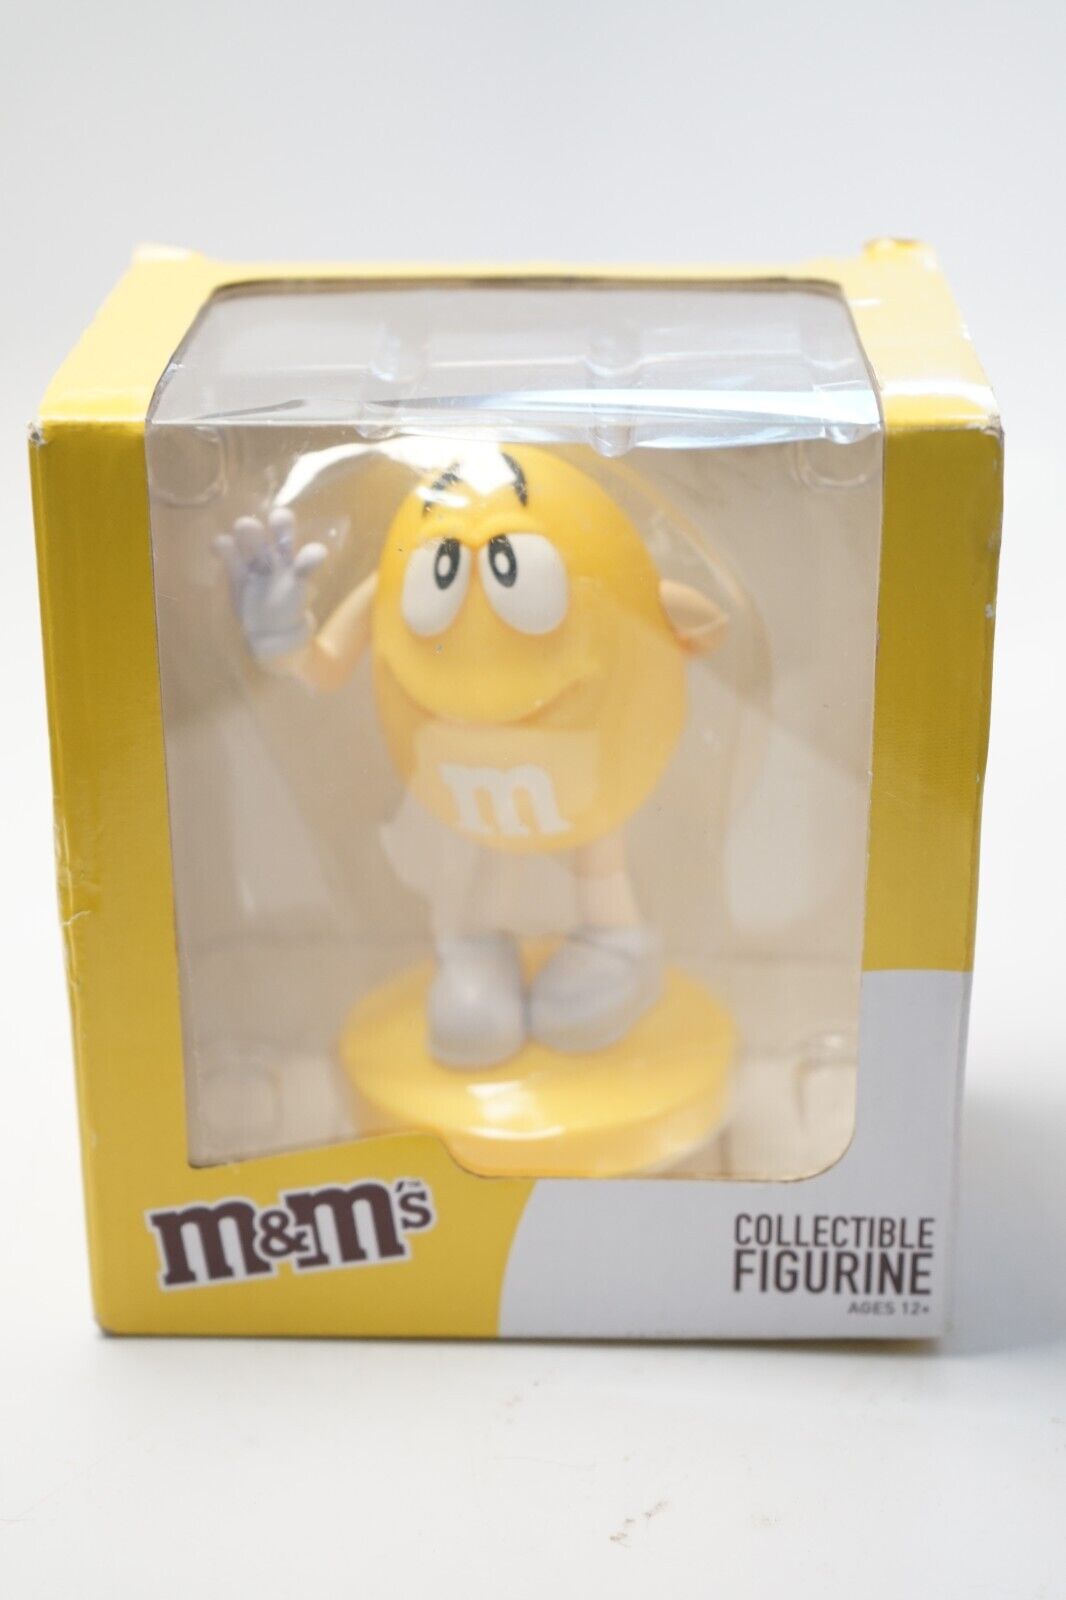 New M&M Collectible Figurine Action Figure 2019 Mars - Yellow Peanut M&M Statue